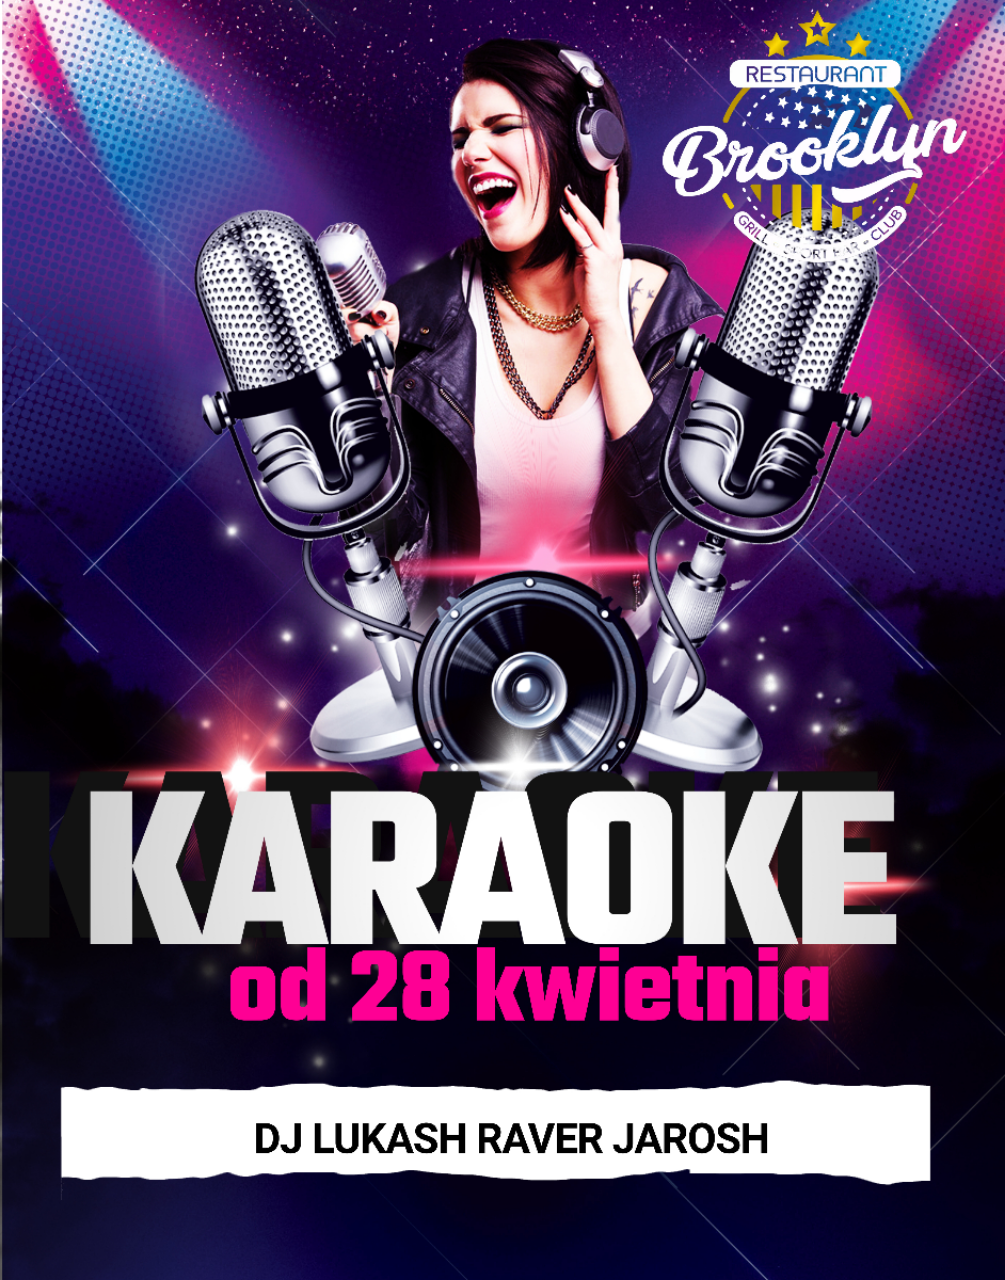 karaoke music party